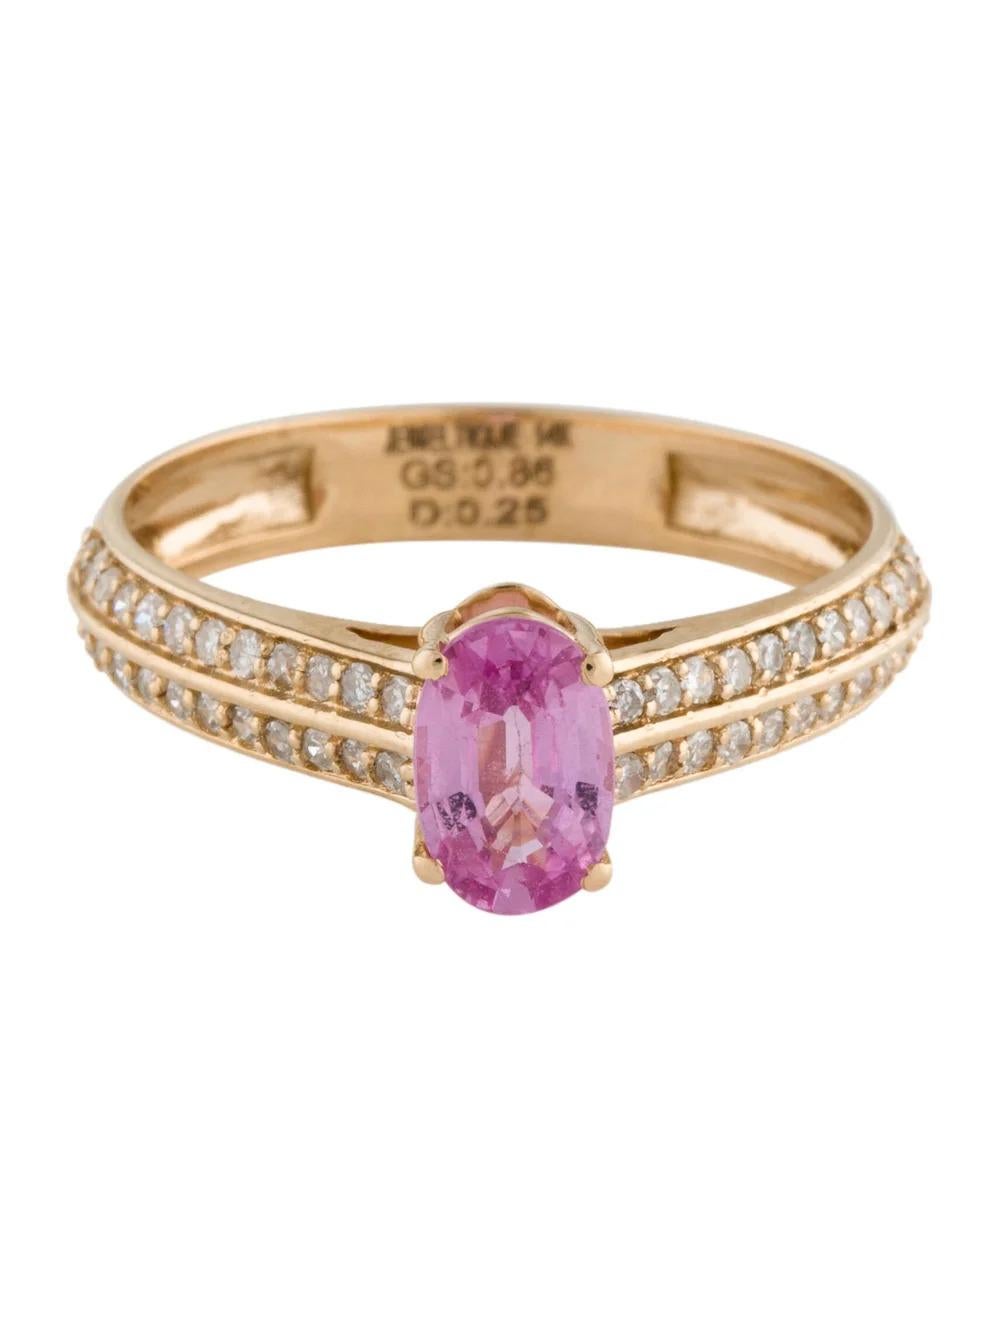 Oval Cut 14K Pink Sapphire & Diamond Cocktail Ring, Size 6.75 - Stunning Elegance